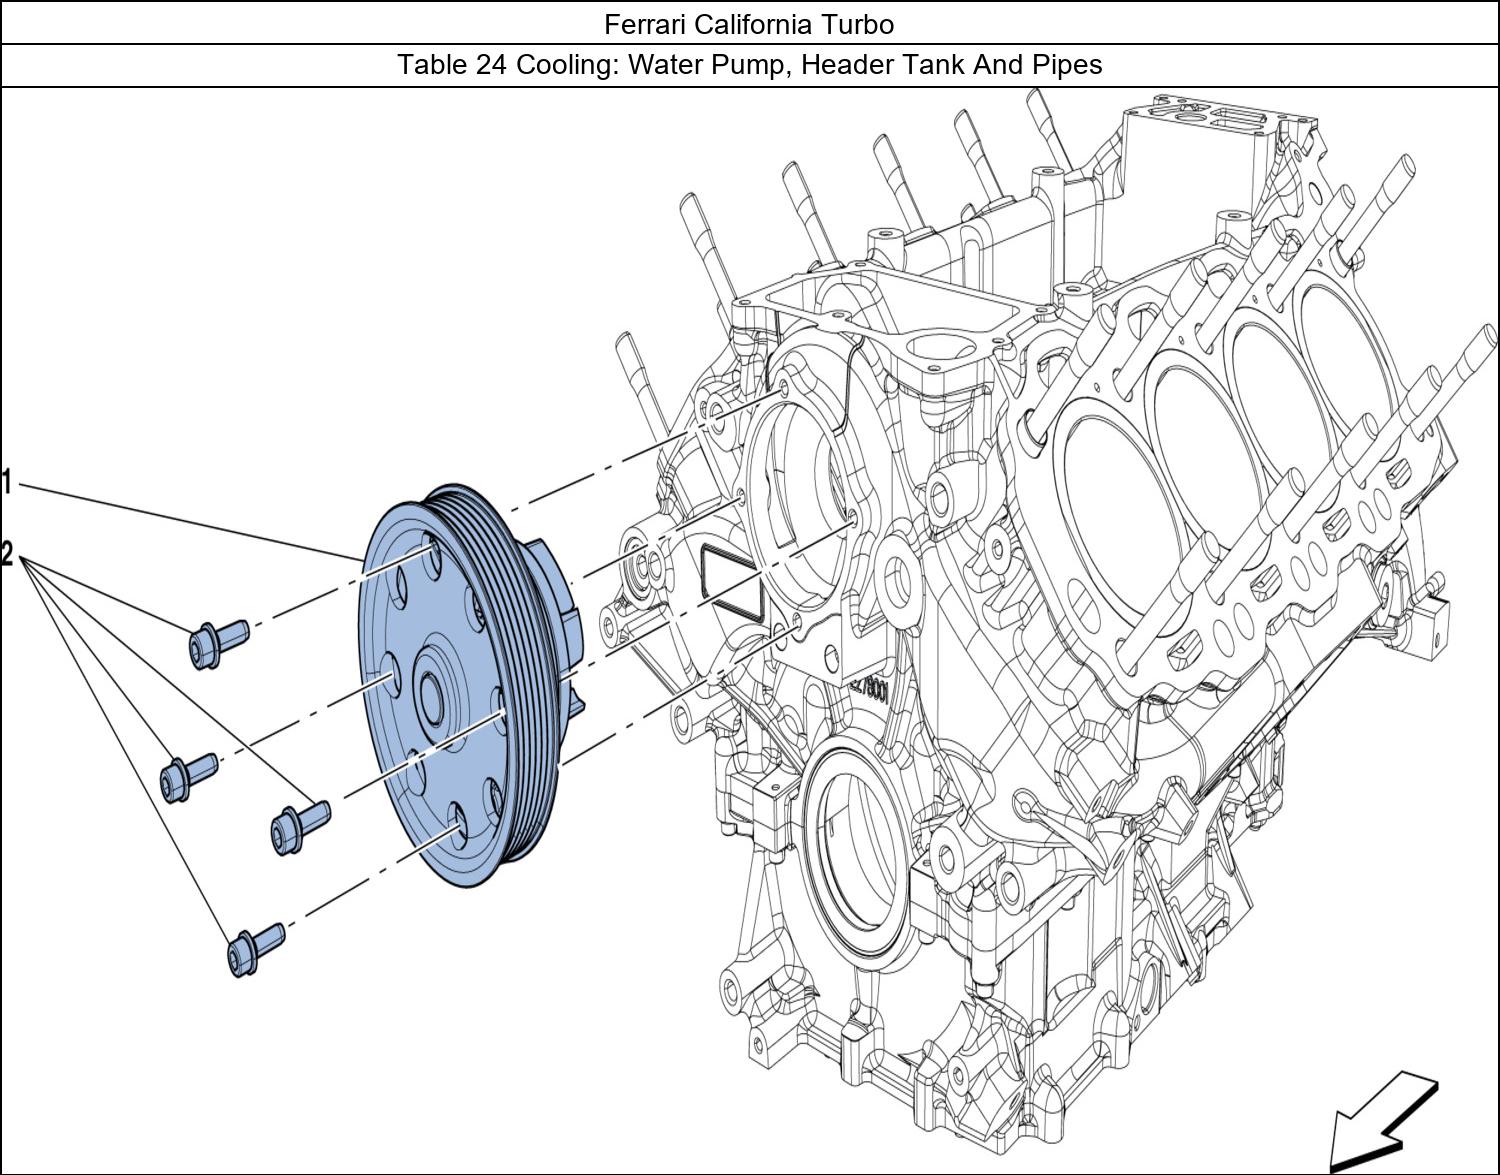 Ferrari Parts Ferrari California Turbo Table 24 Cooling: Water Pump, Header Tank And Pipes